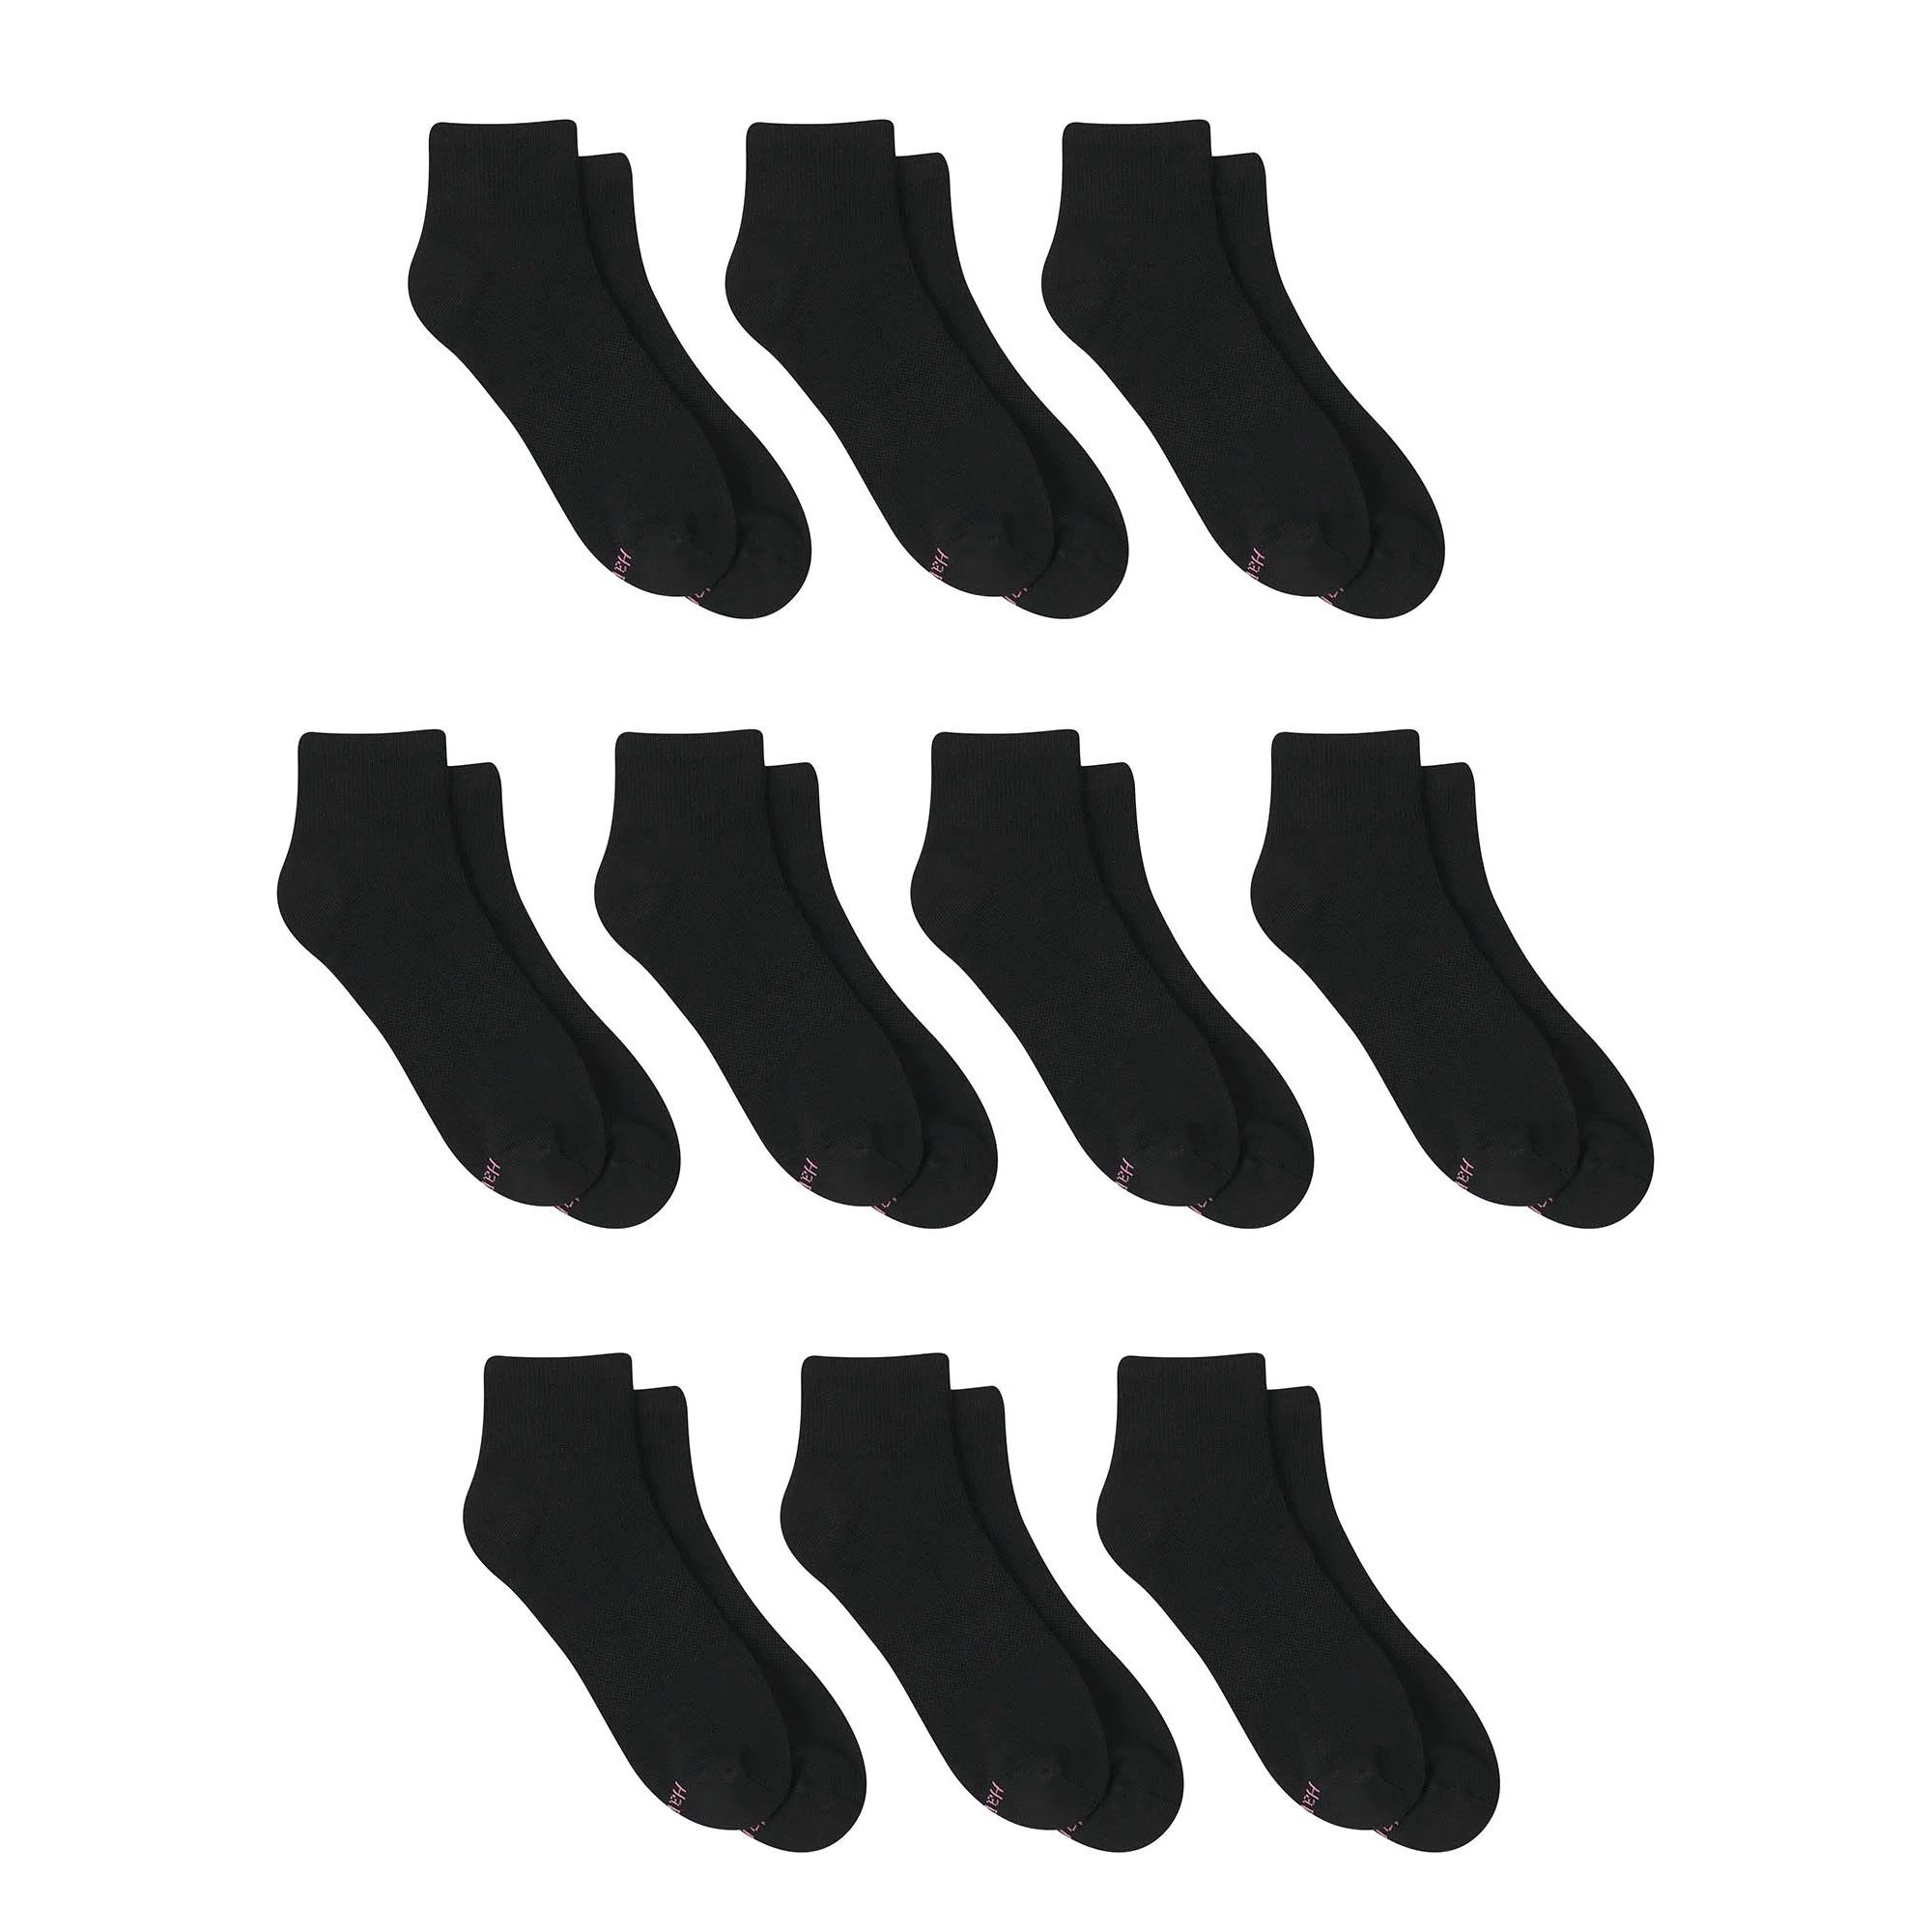 Hanes Womens Comfort Fit Ankle Socks 10-Pack